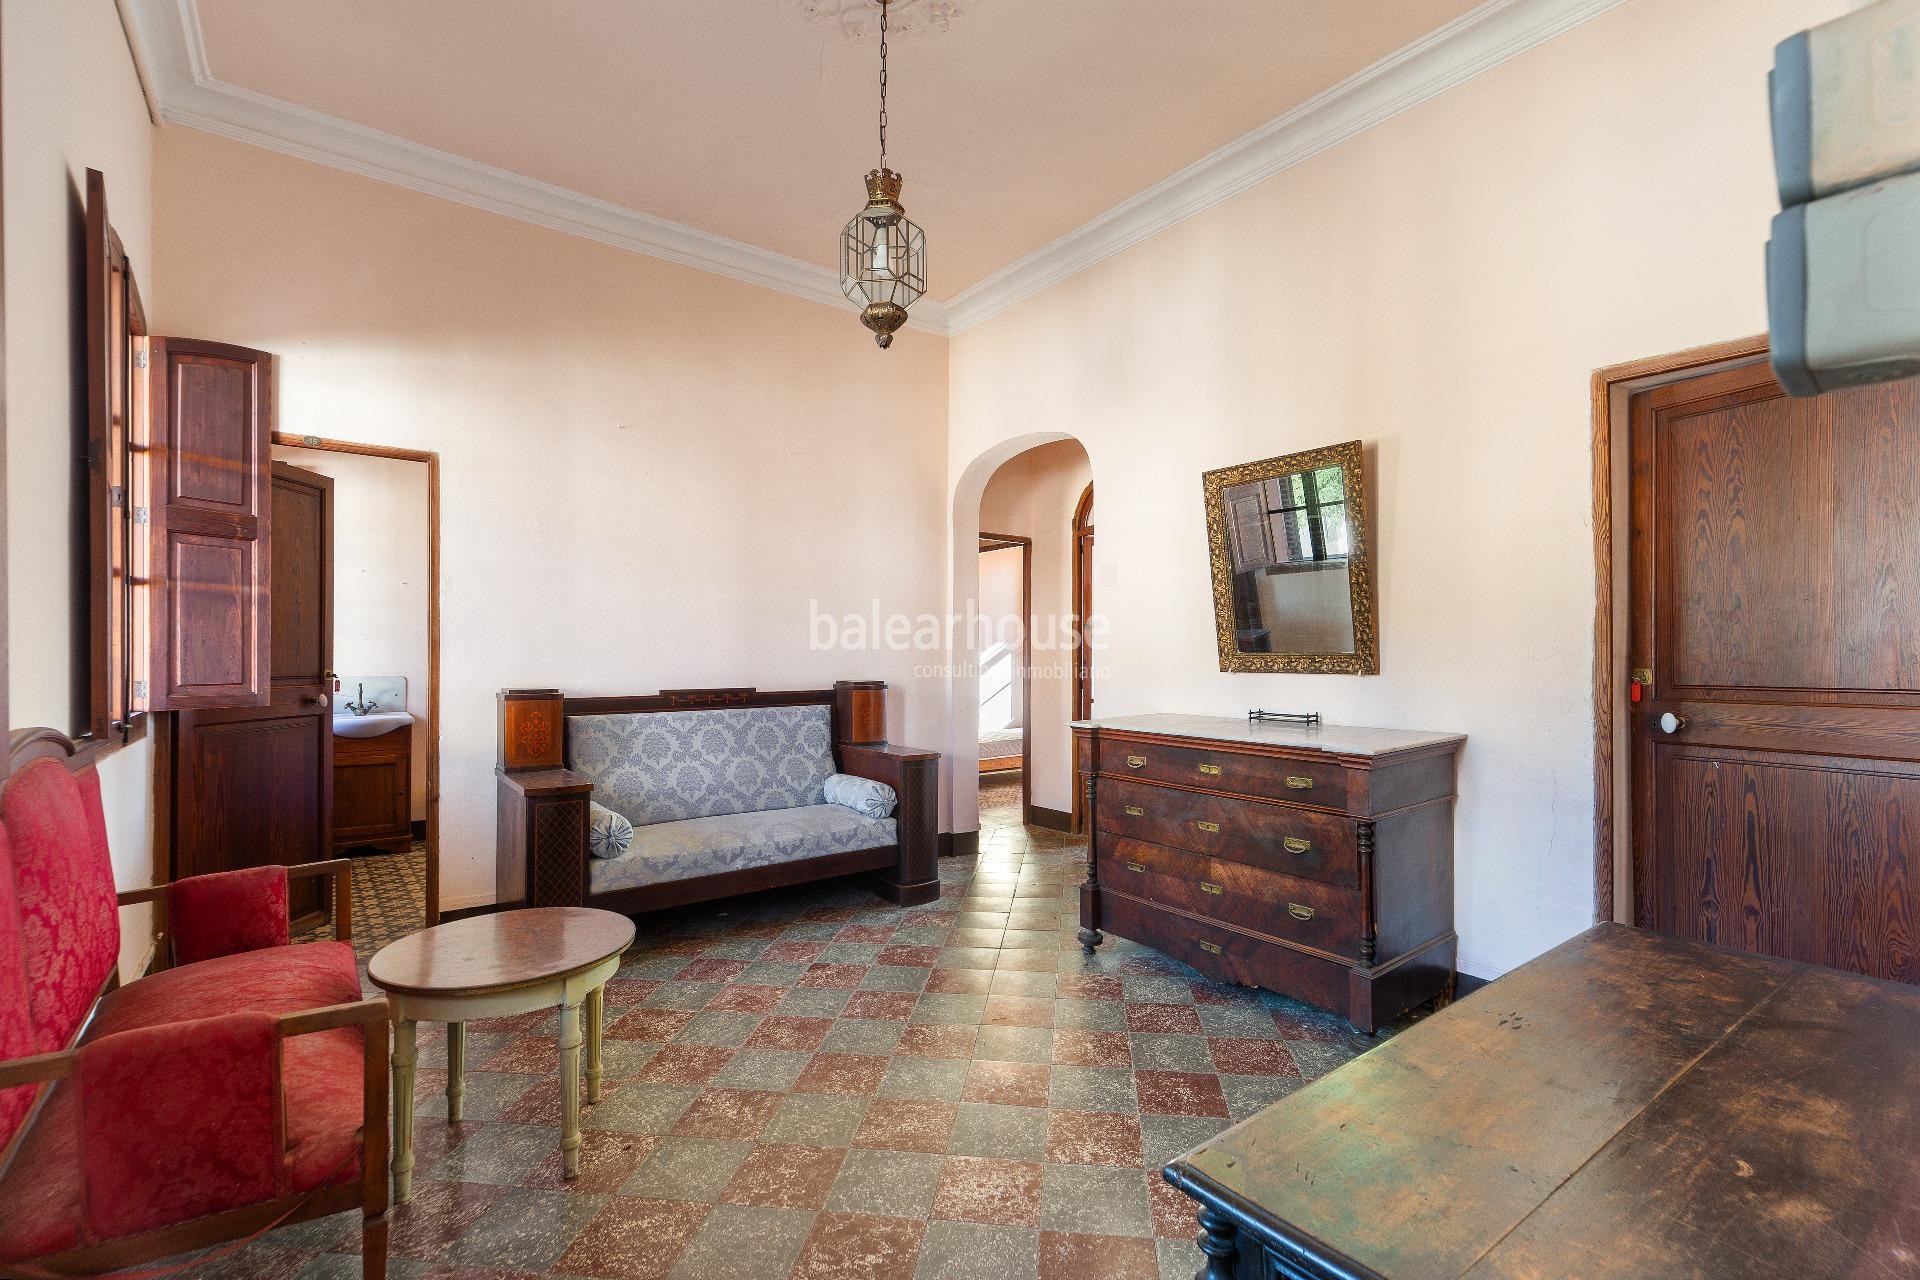 Espectacular casa tradicional mallorquina con enorme potencial hotelero en El Terreno